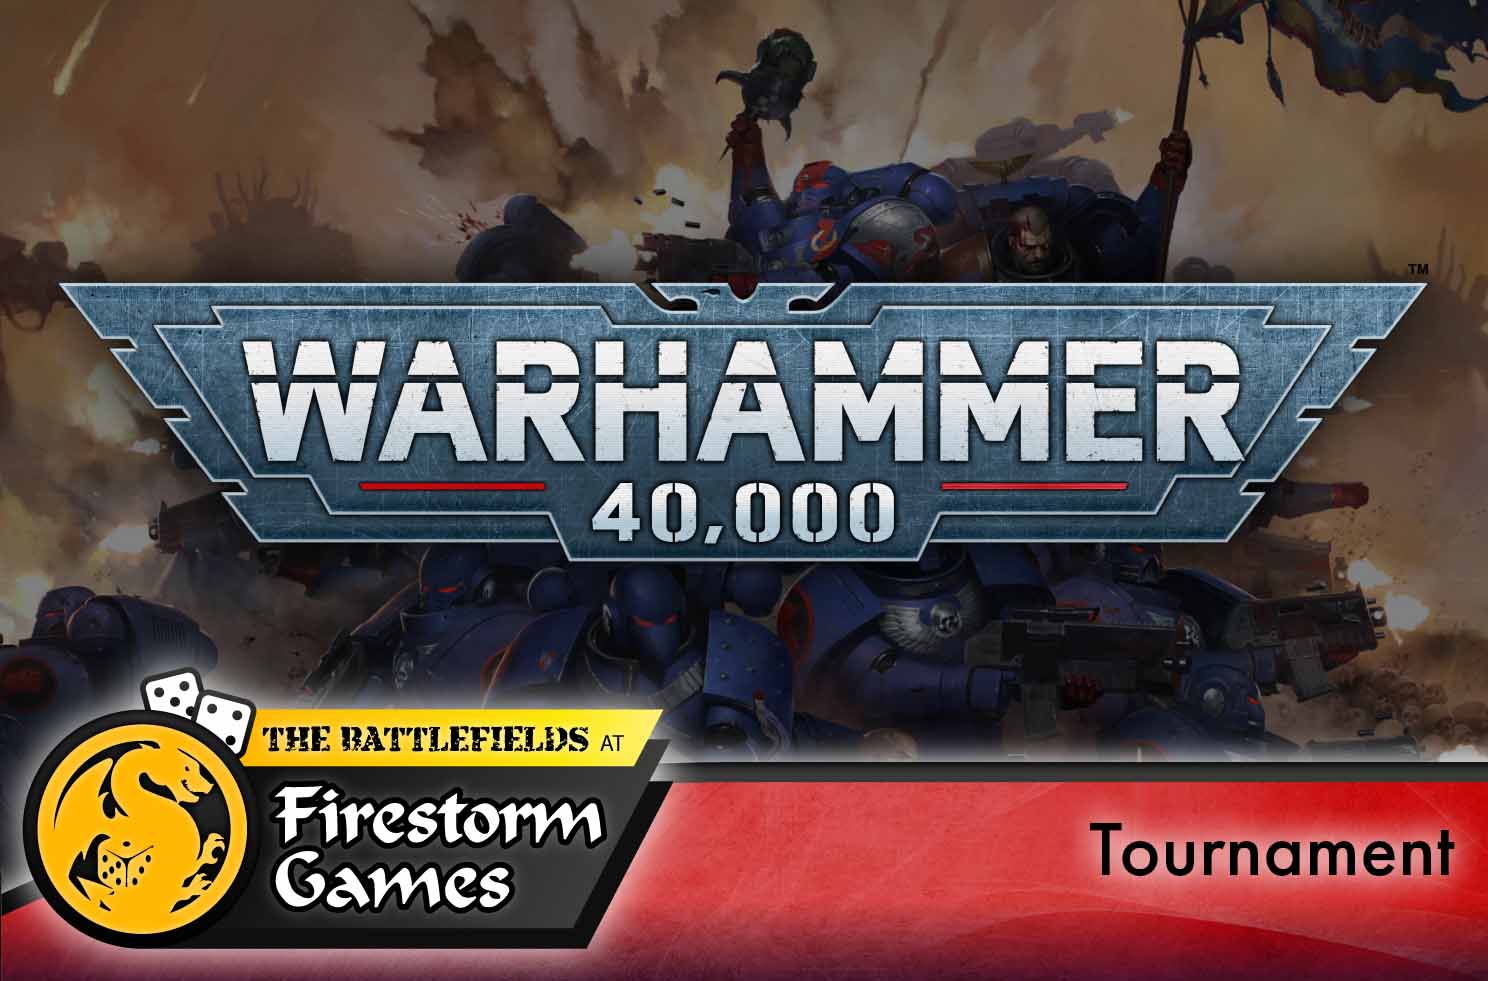 Cardiff Carnage 1 Warhammer 40,000 Tournament